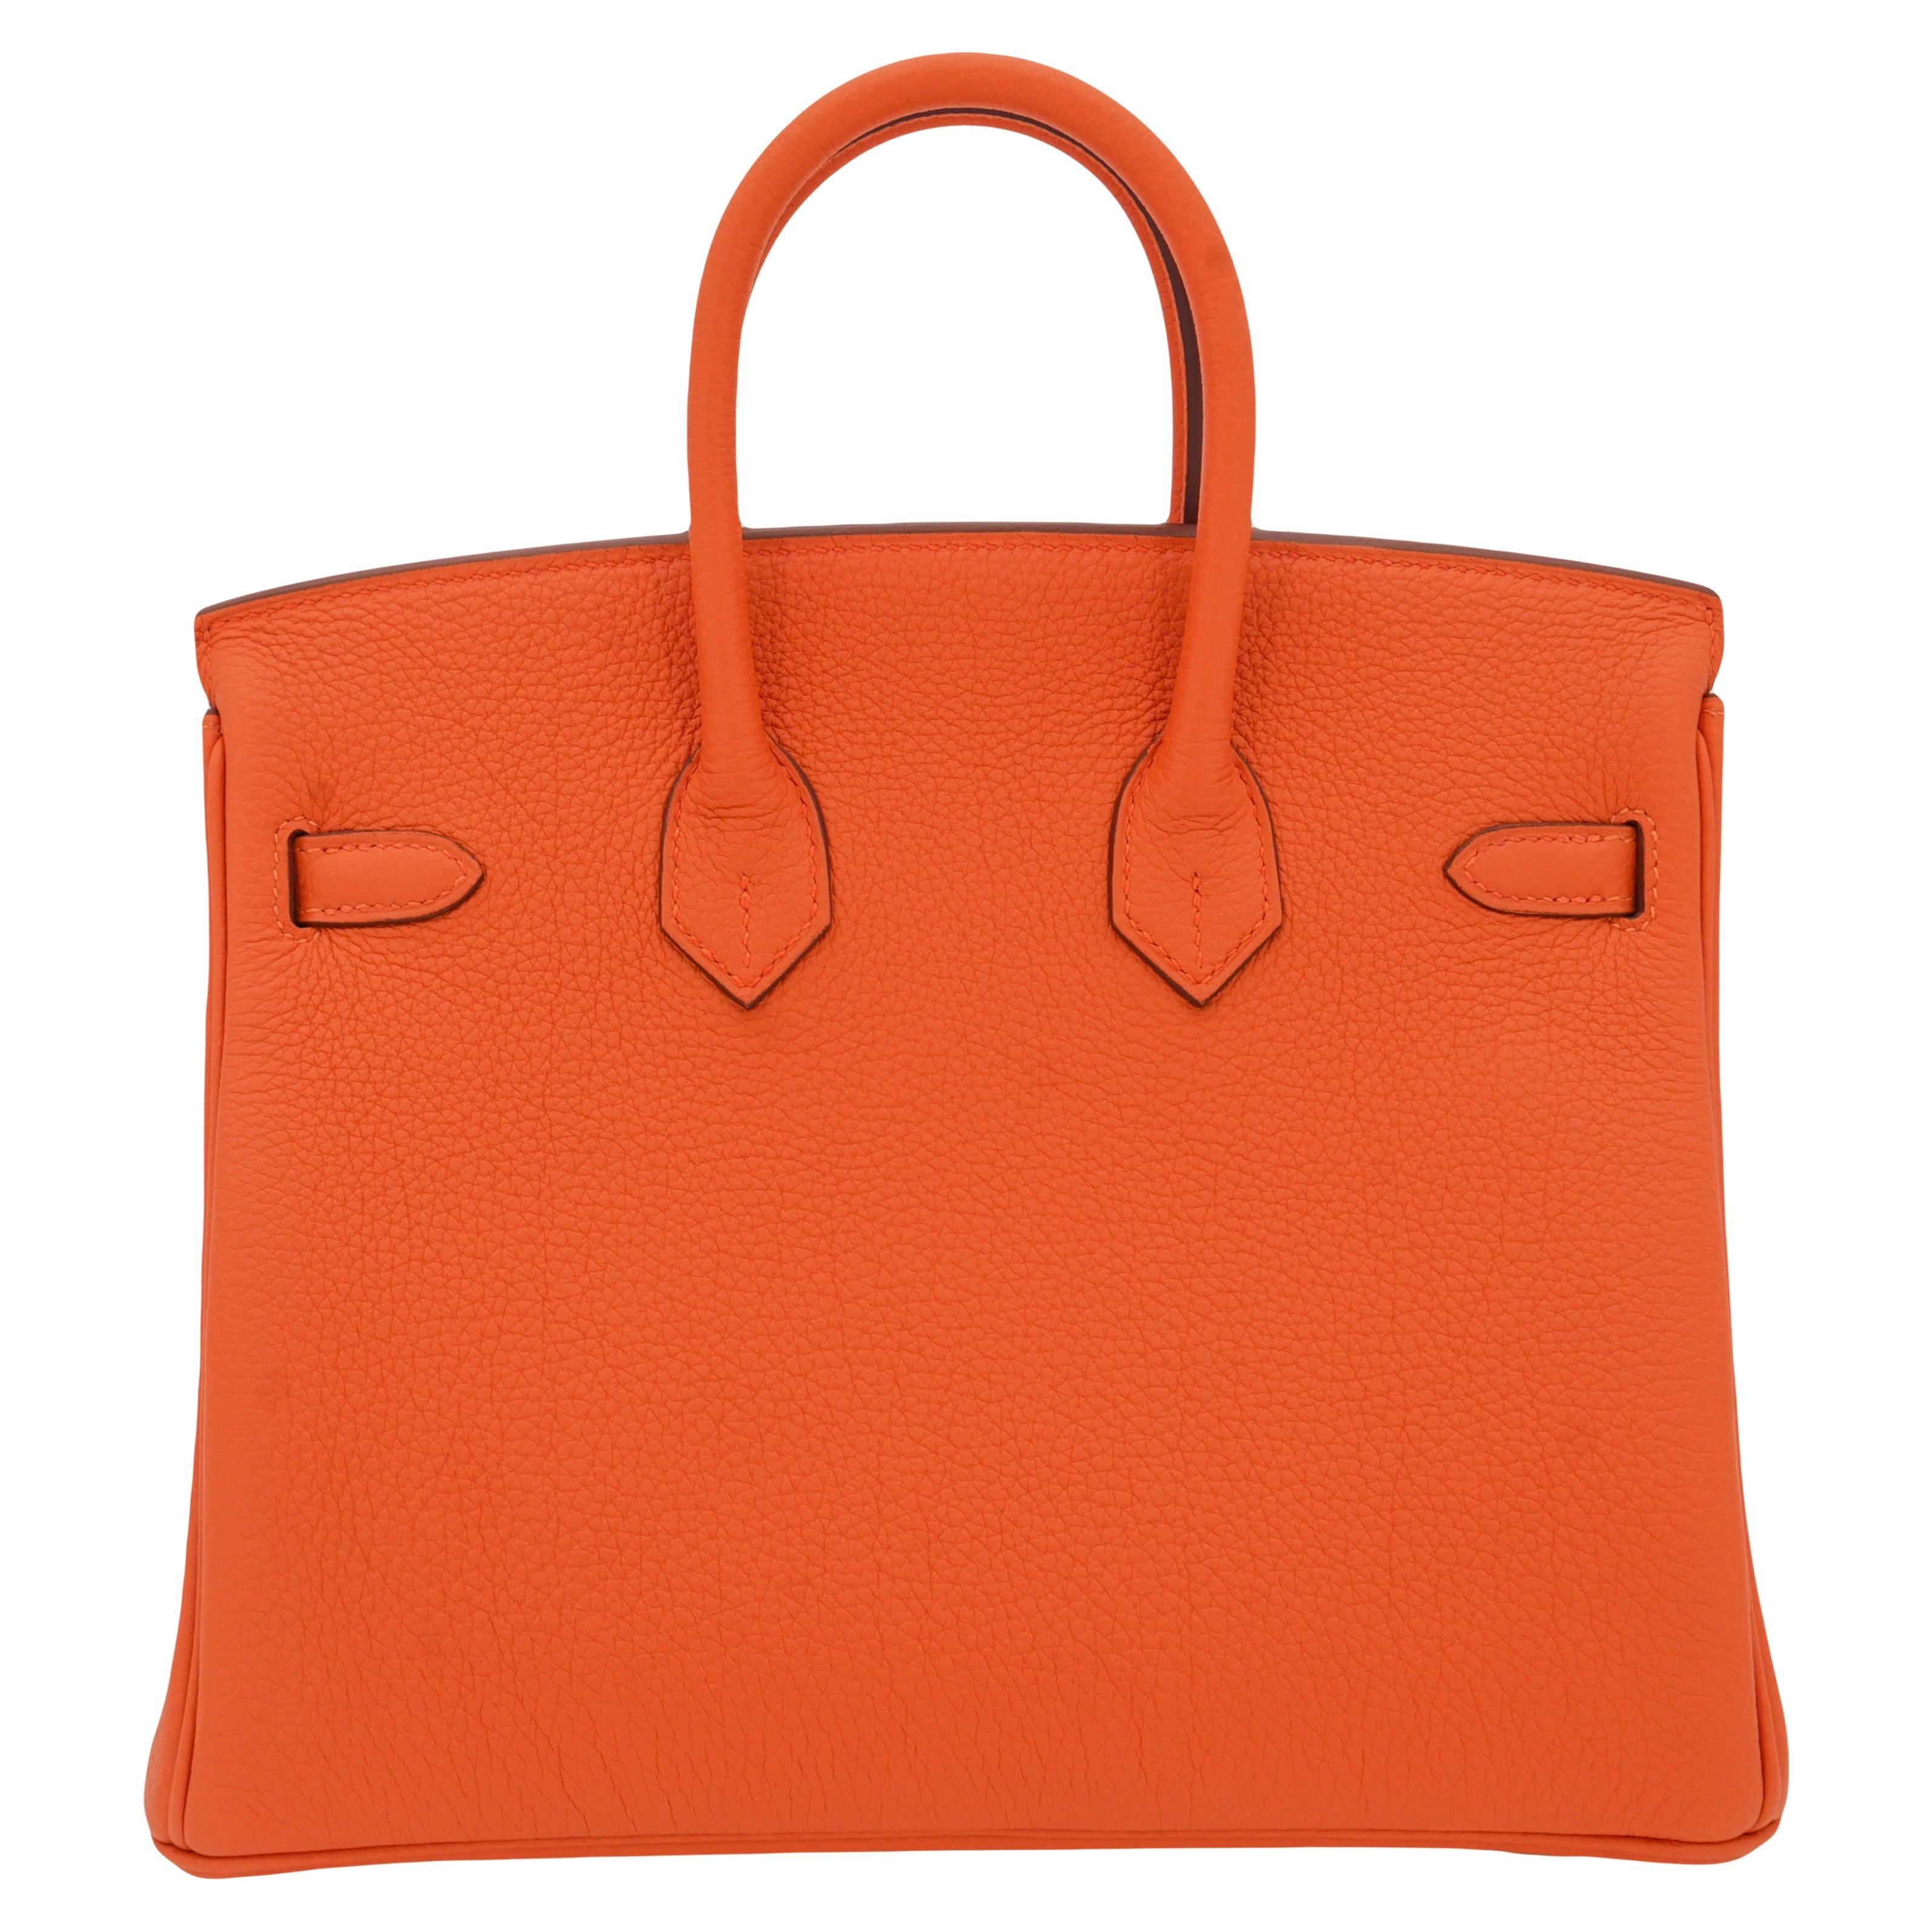 Hermès 25cm Birkin Orange Togo Leather Gold Hardware In New Condition For Sale In Santa Rosa Beach, FL